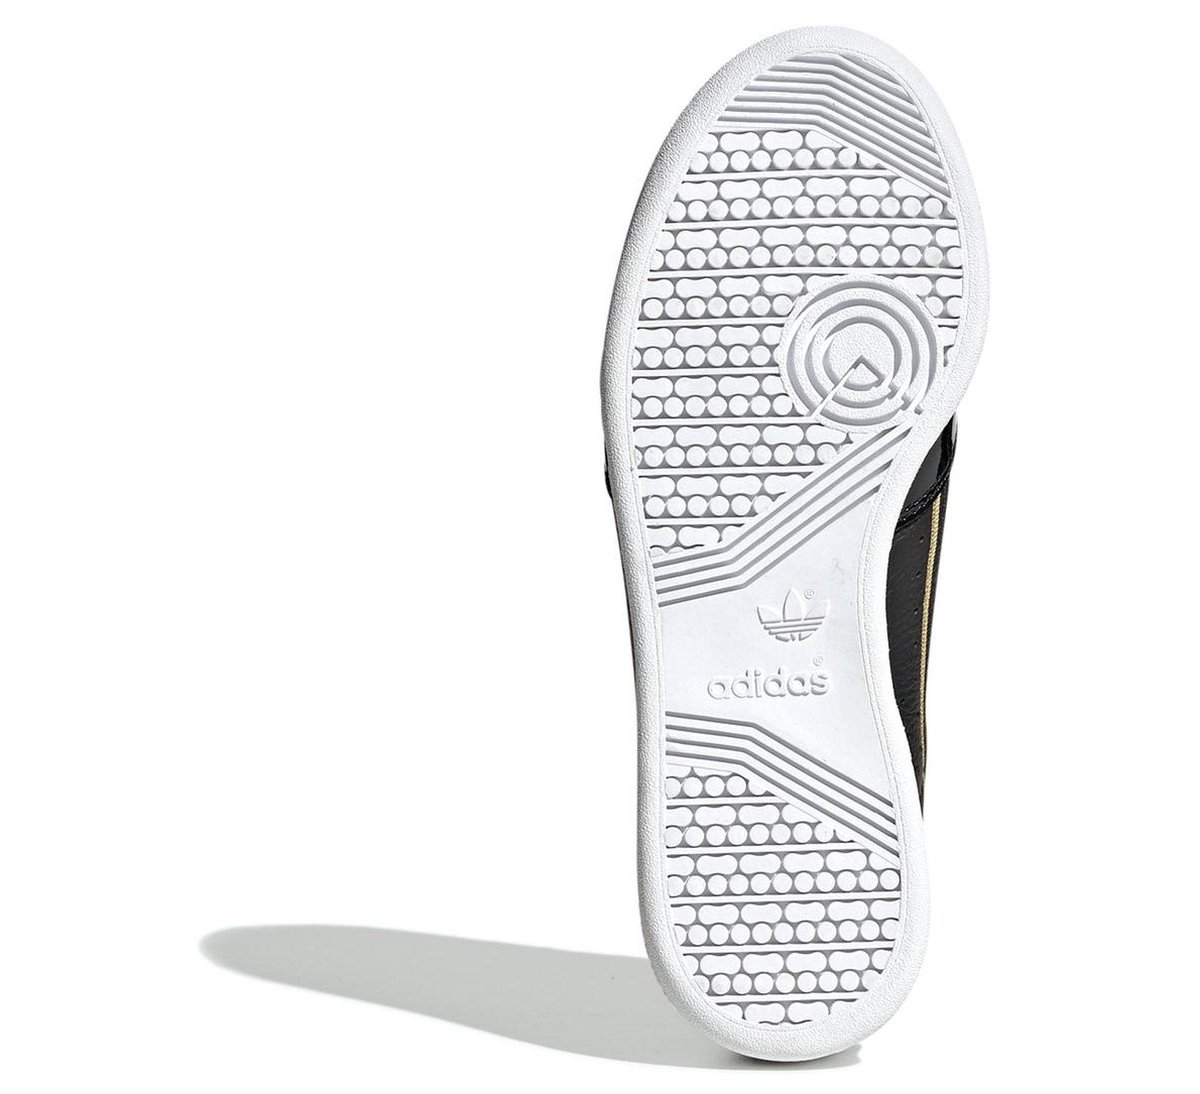 adidas Sneakers - Maat 40 2/3 - Vrouwen - zwart/goud/wit Sneakers w5mWR4Xn